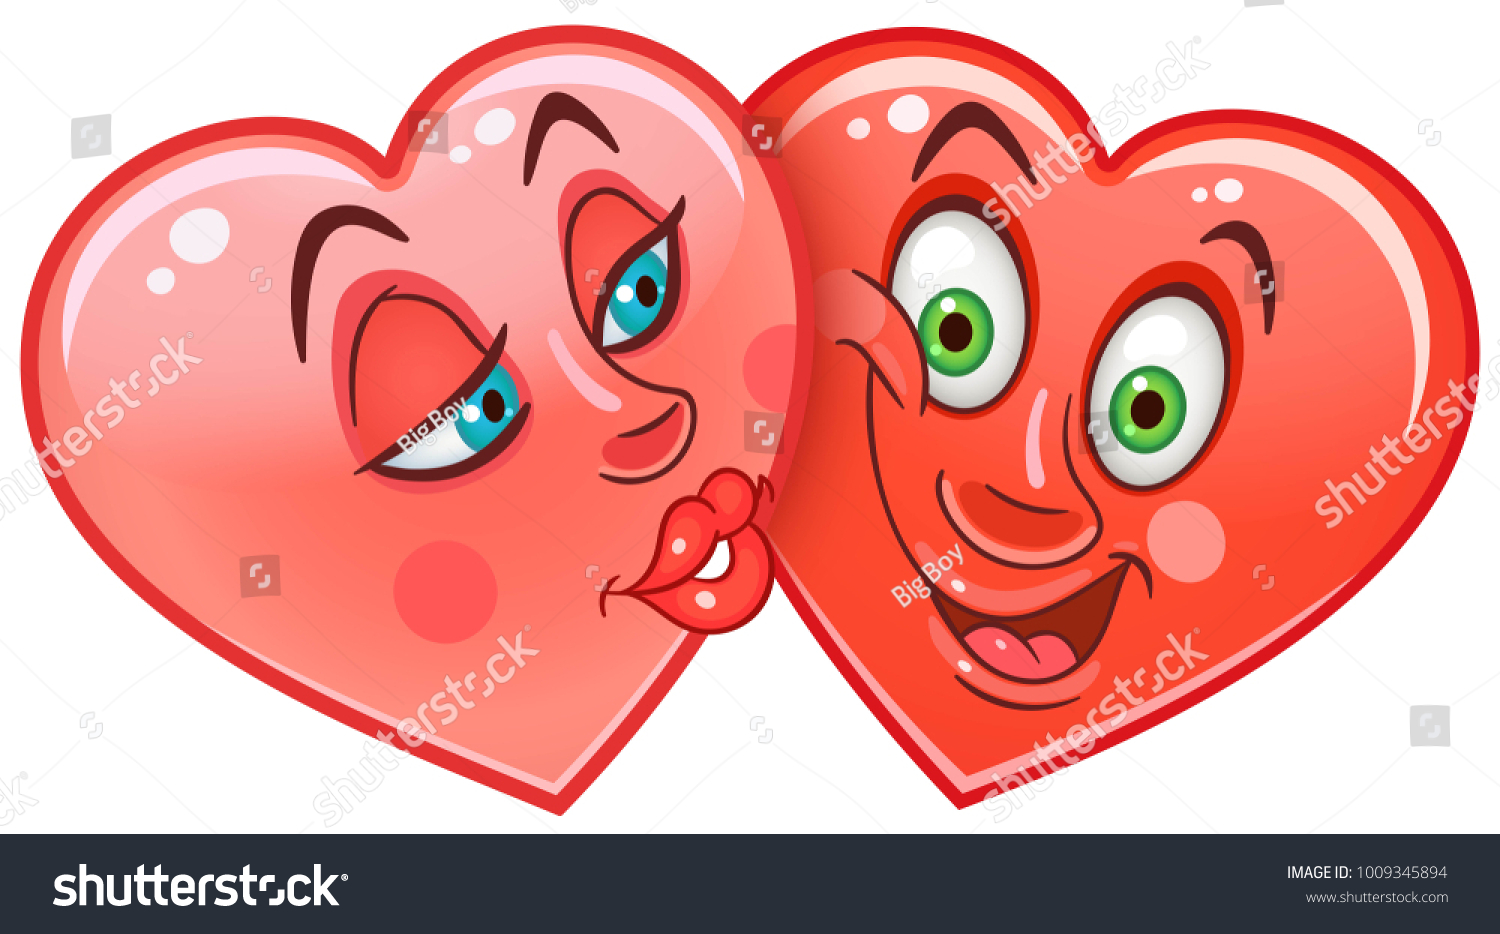 Cartoon Red Hearts Kiss Emoticons Smiley Stok Vektör (Telifsiz) 1009345894.